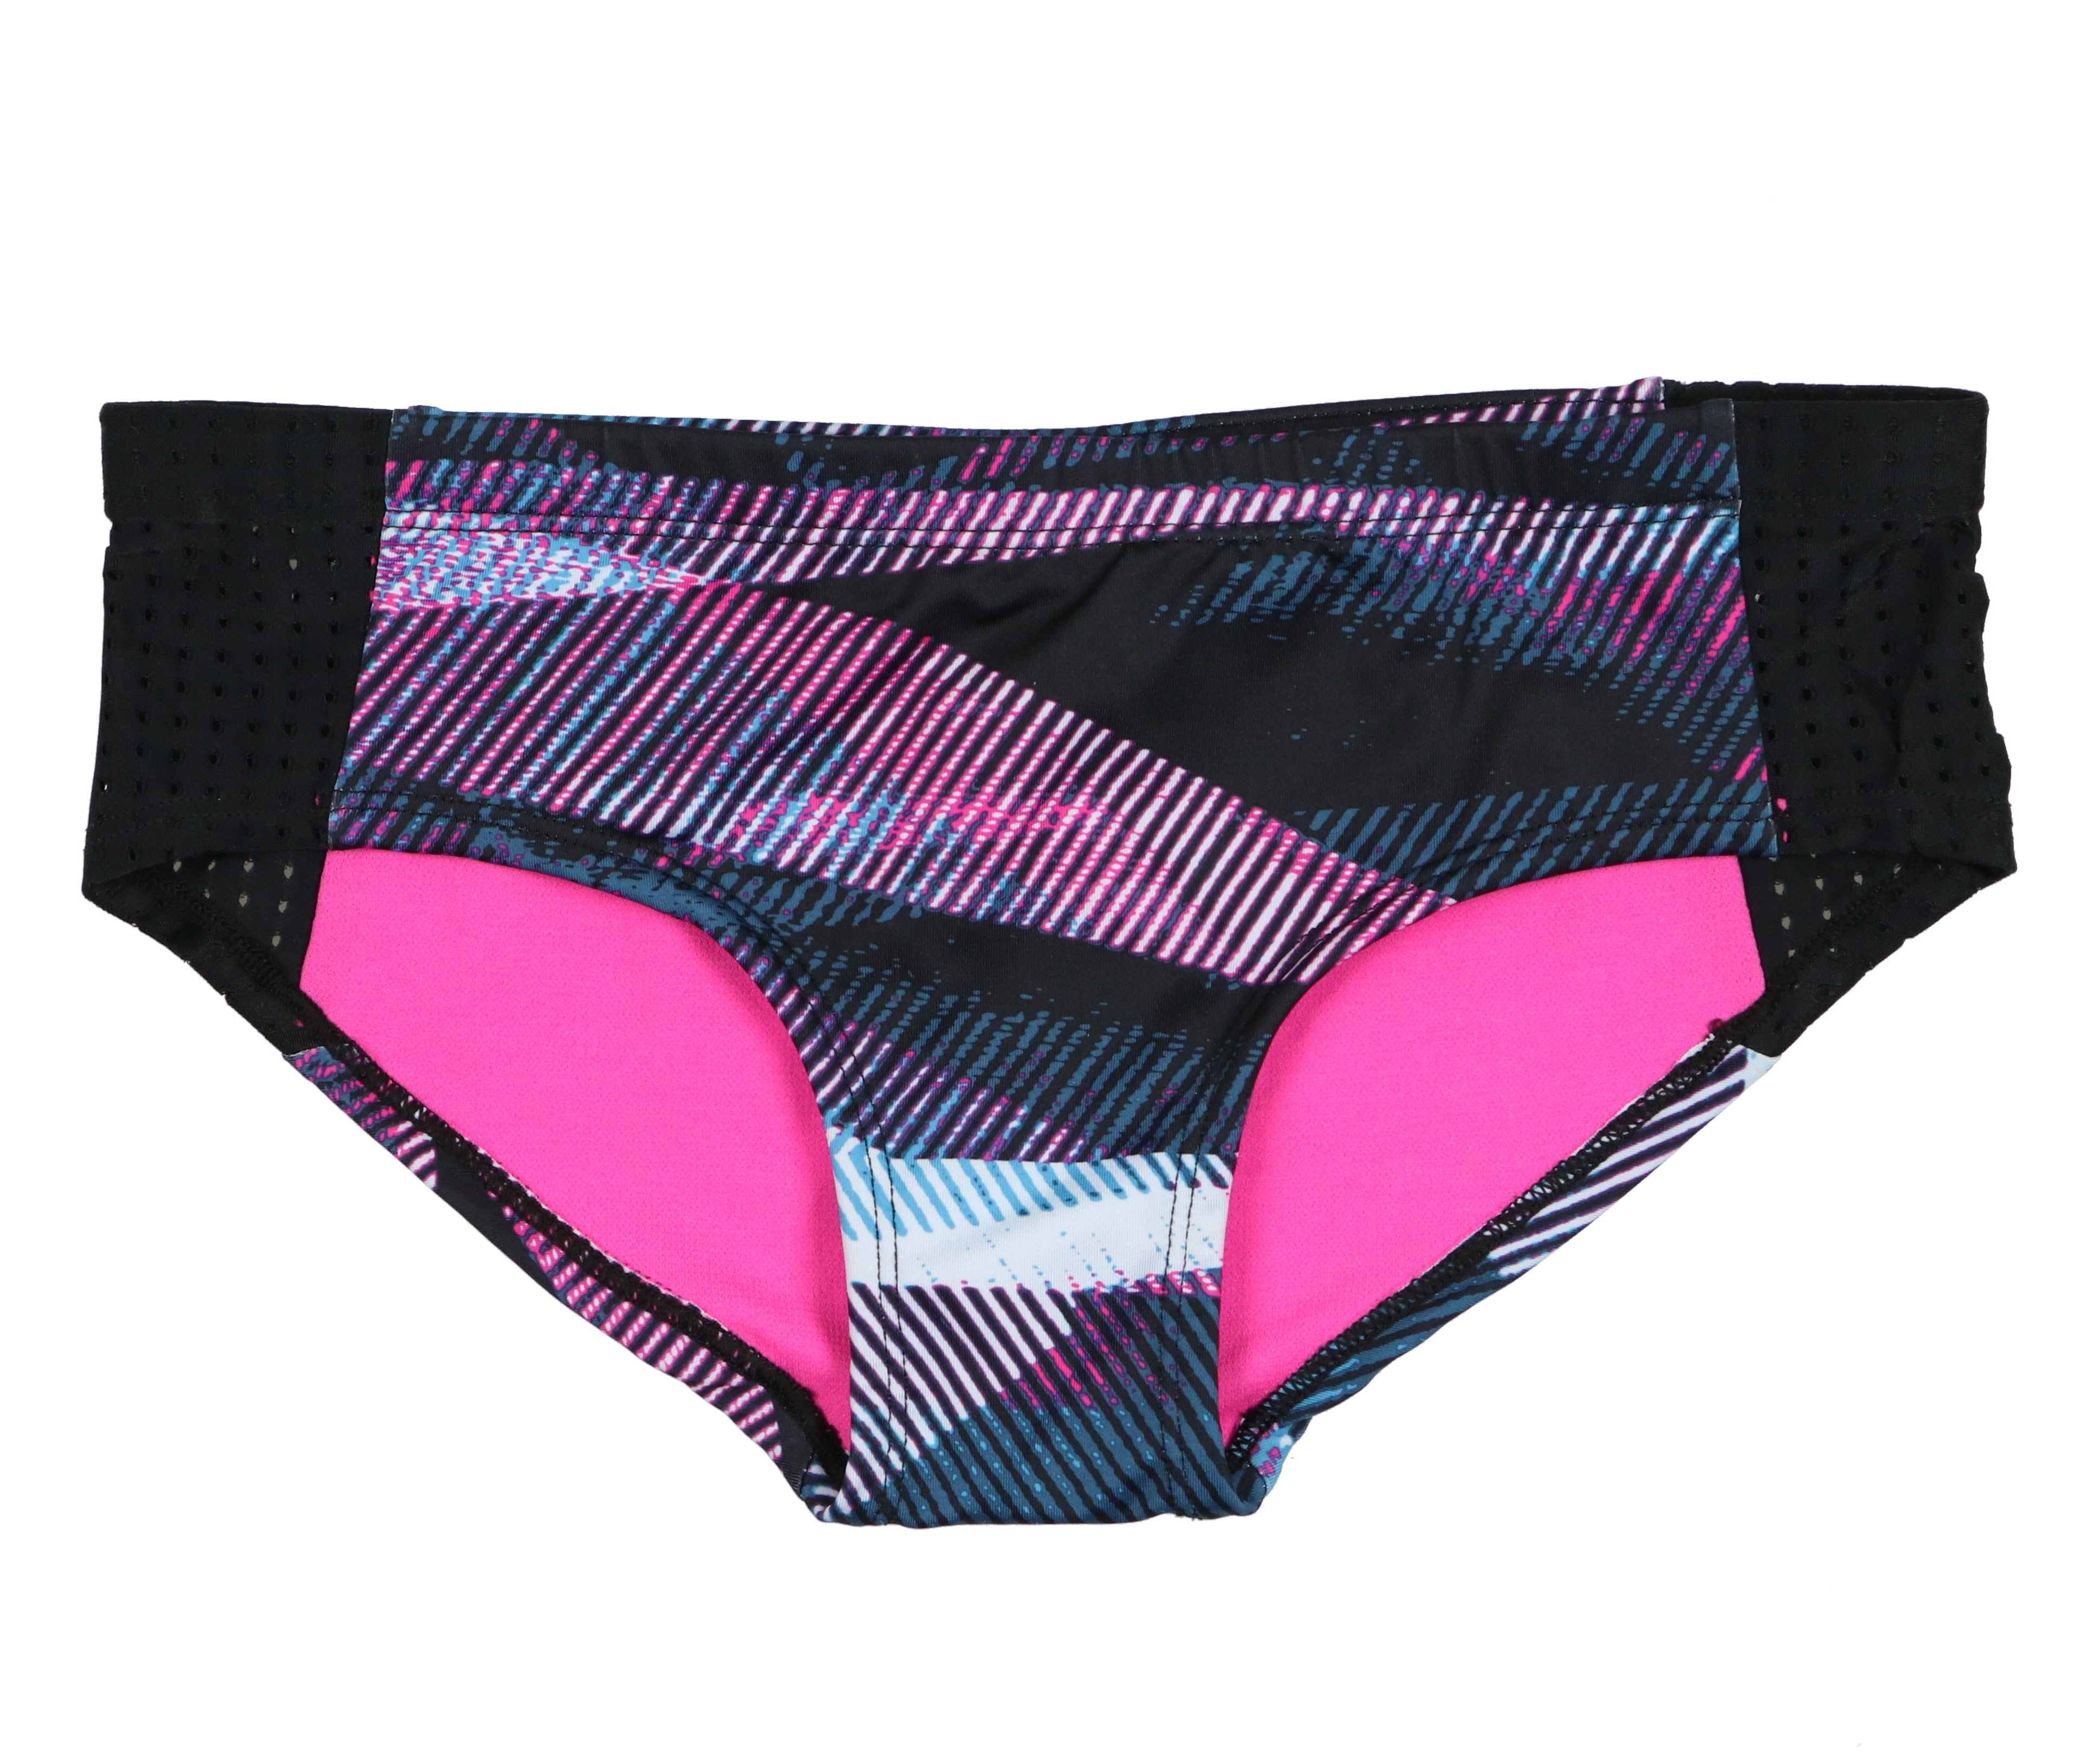 Nike Women's Line Up Printed Hipster Bikini Bottoms Size XL Laser Fuschia Pink Blue - image 3 of 4